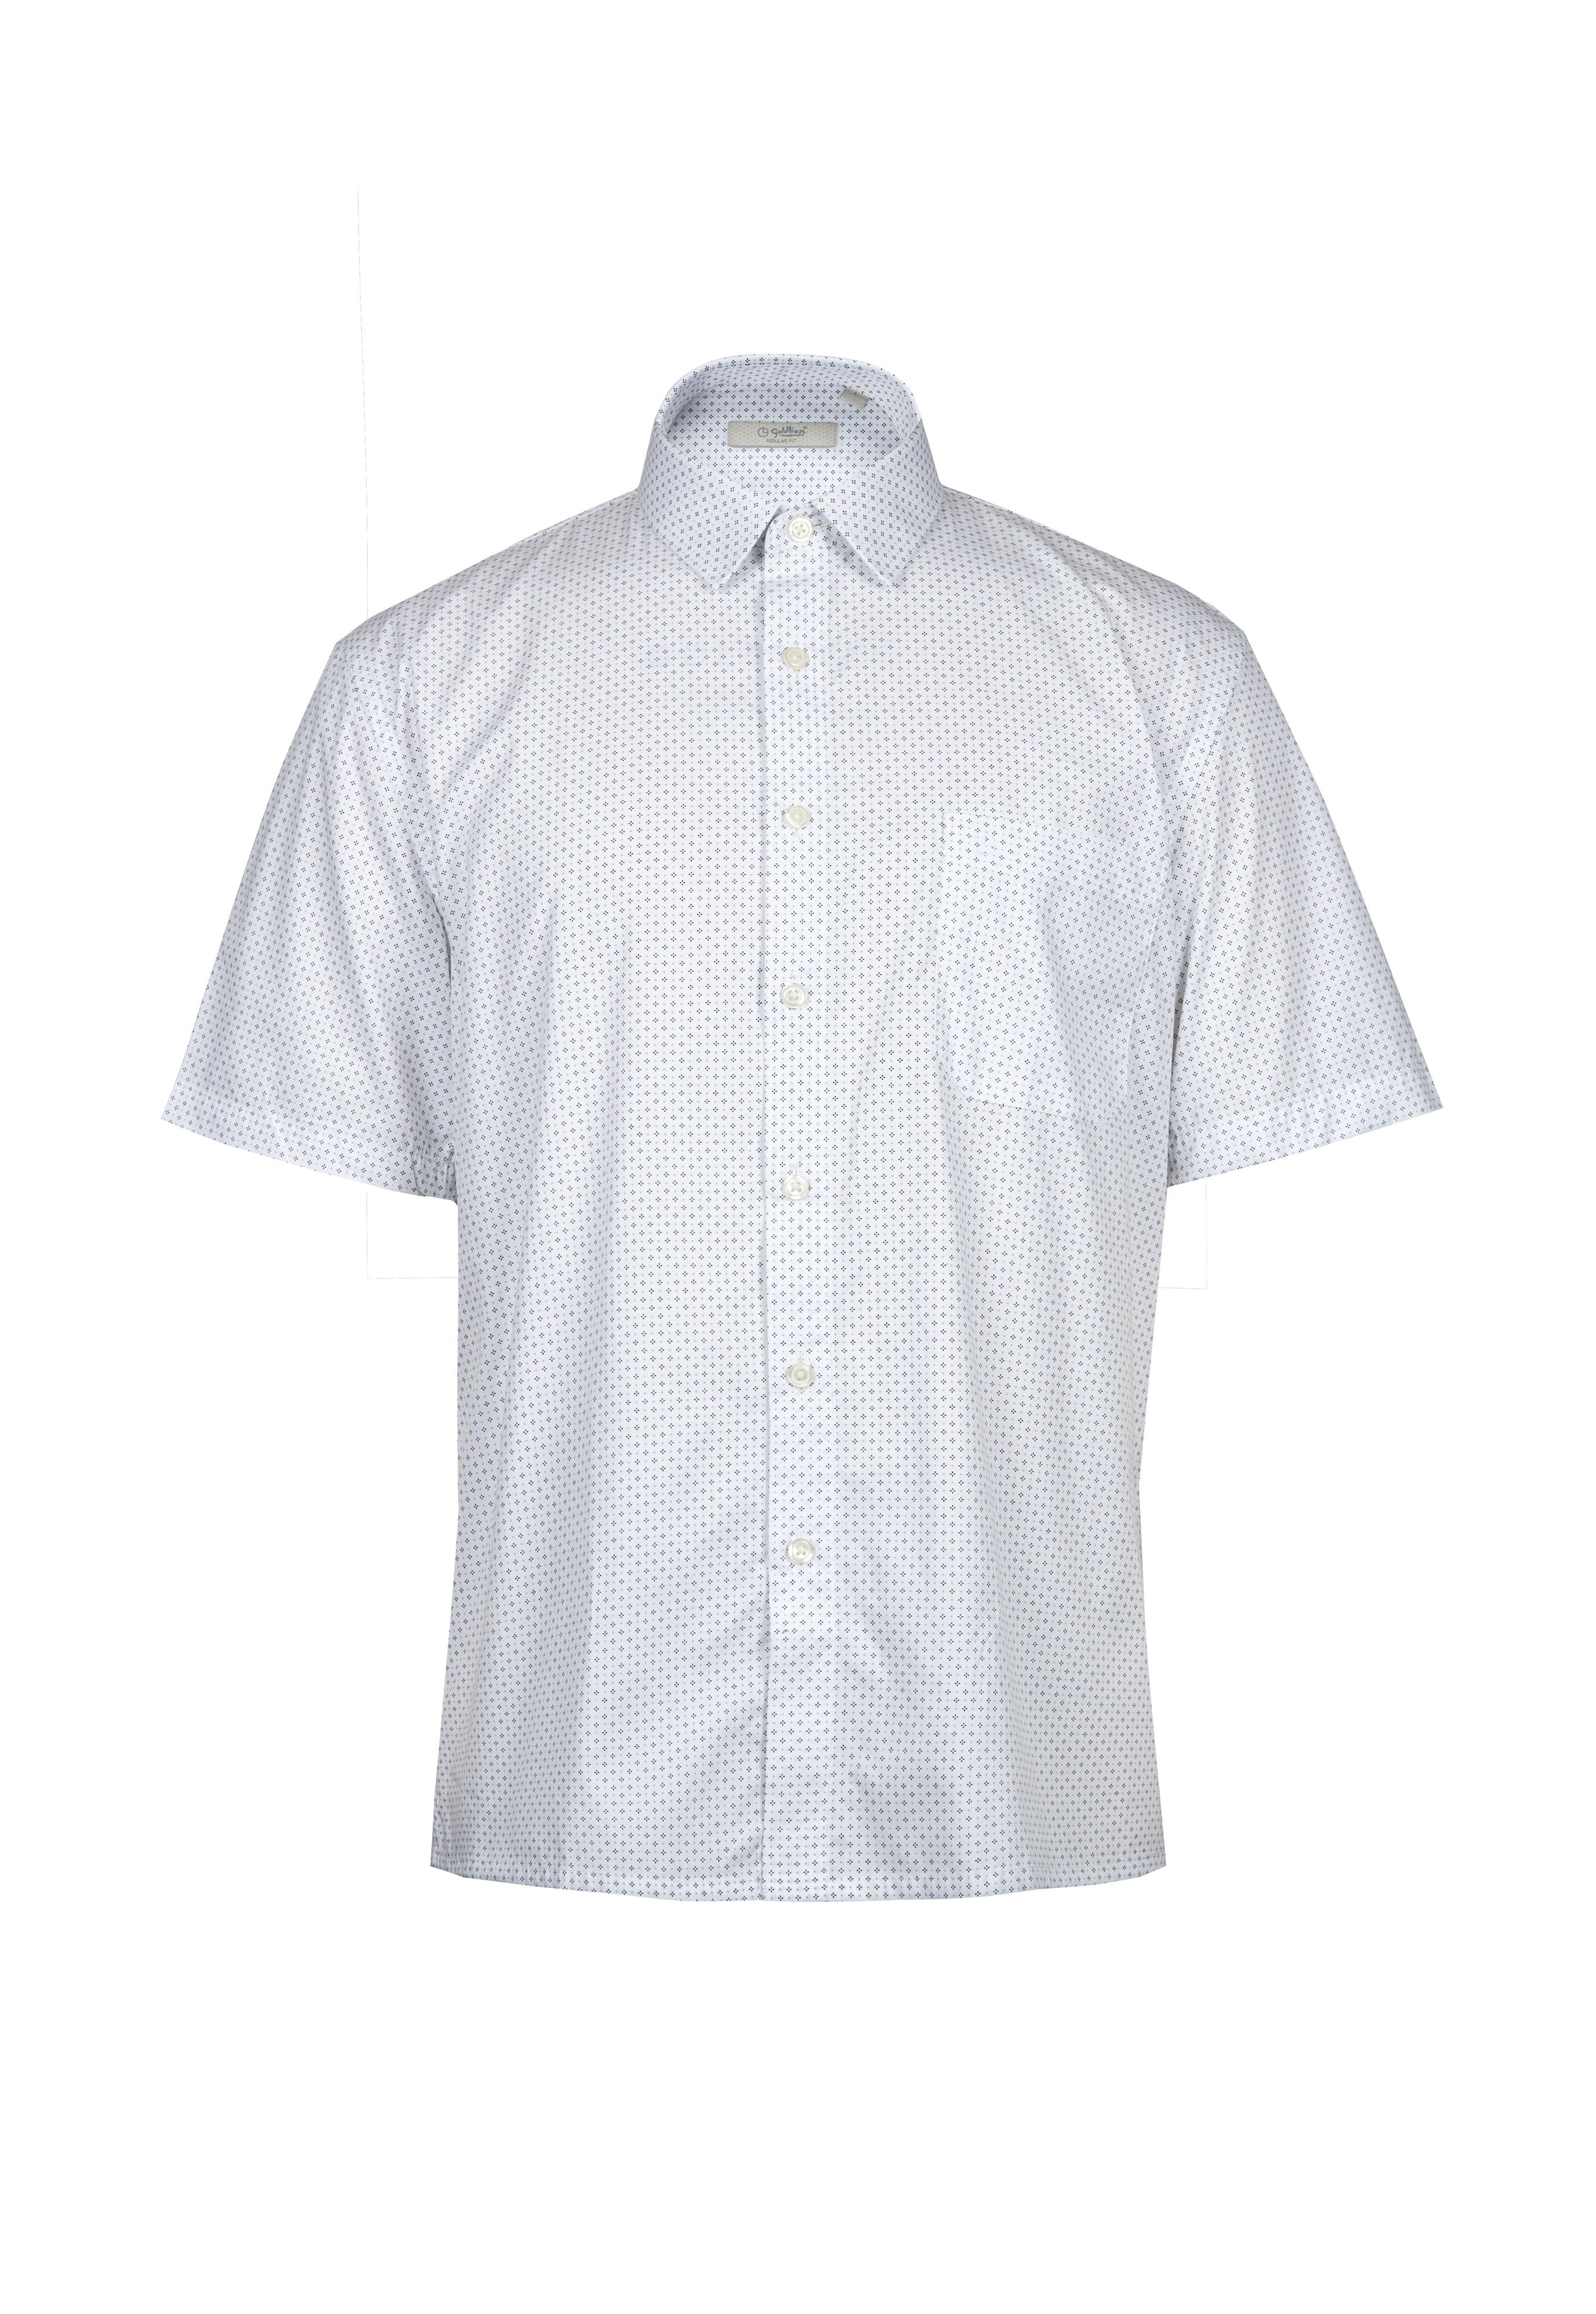 [Online Exclusive] Goldlion Smart Casual Regular Fit Cotton Short-Sleeved Shirt